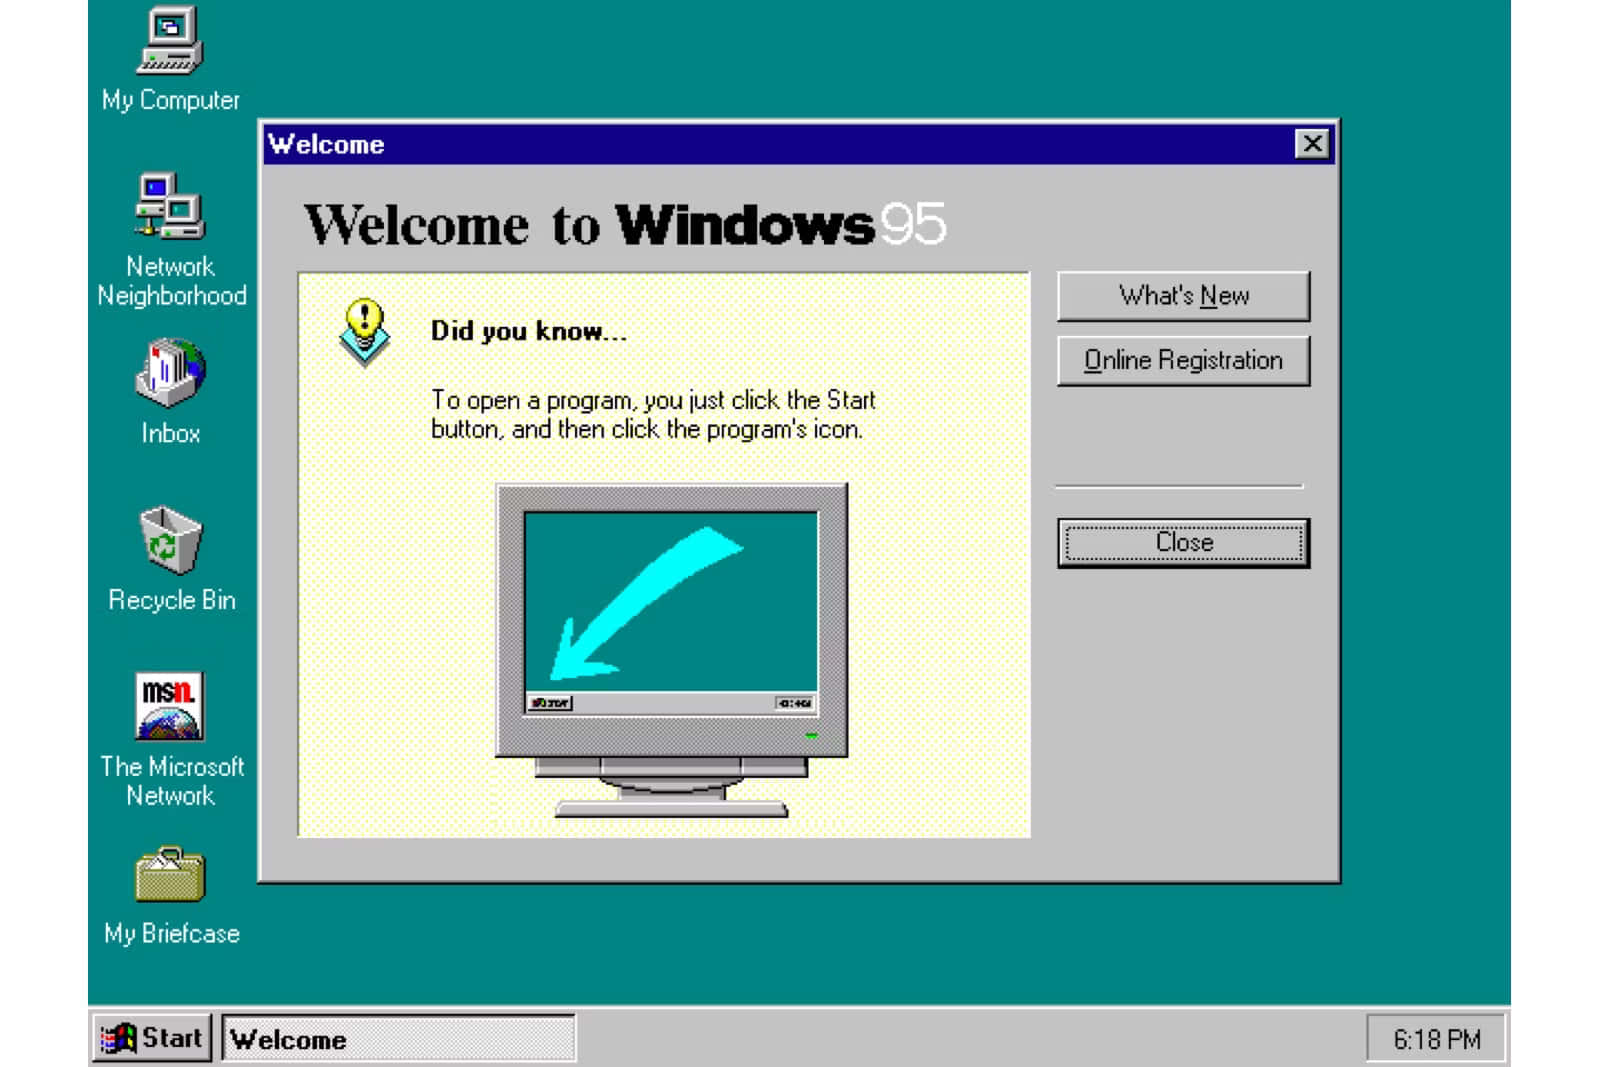 "The Reliable, User-Friendly Platform: Windows 95"